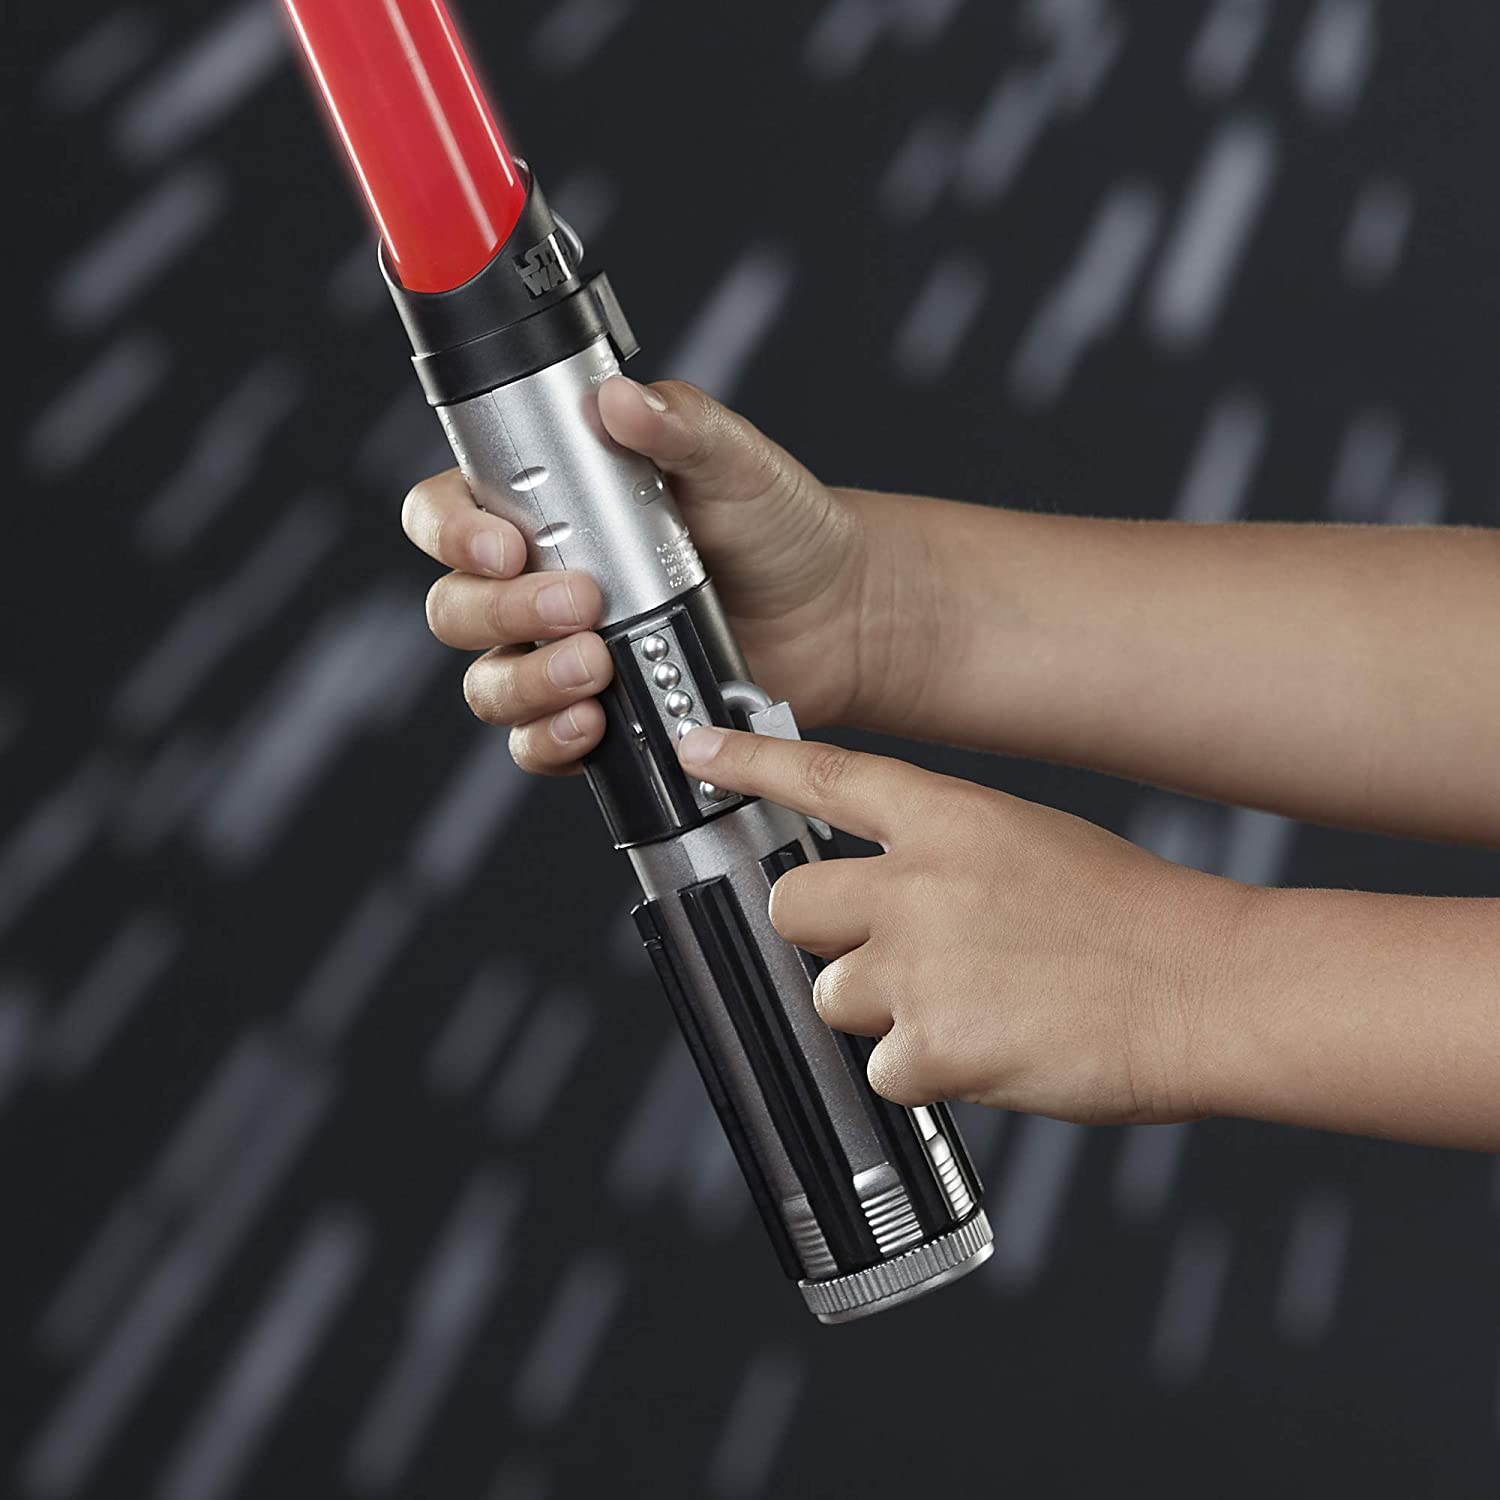 Star Wars Darth Vader Electronic Red Lightsaber Toy NIB 